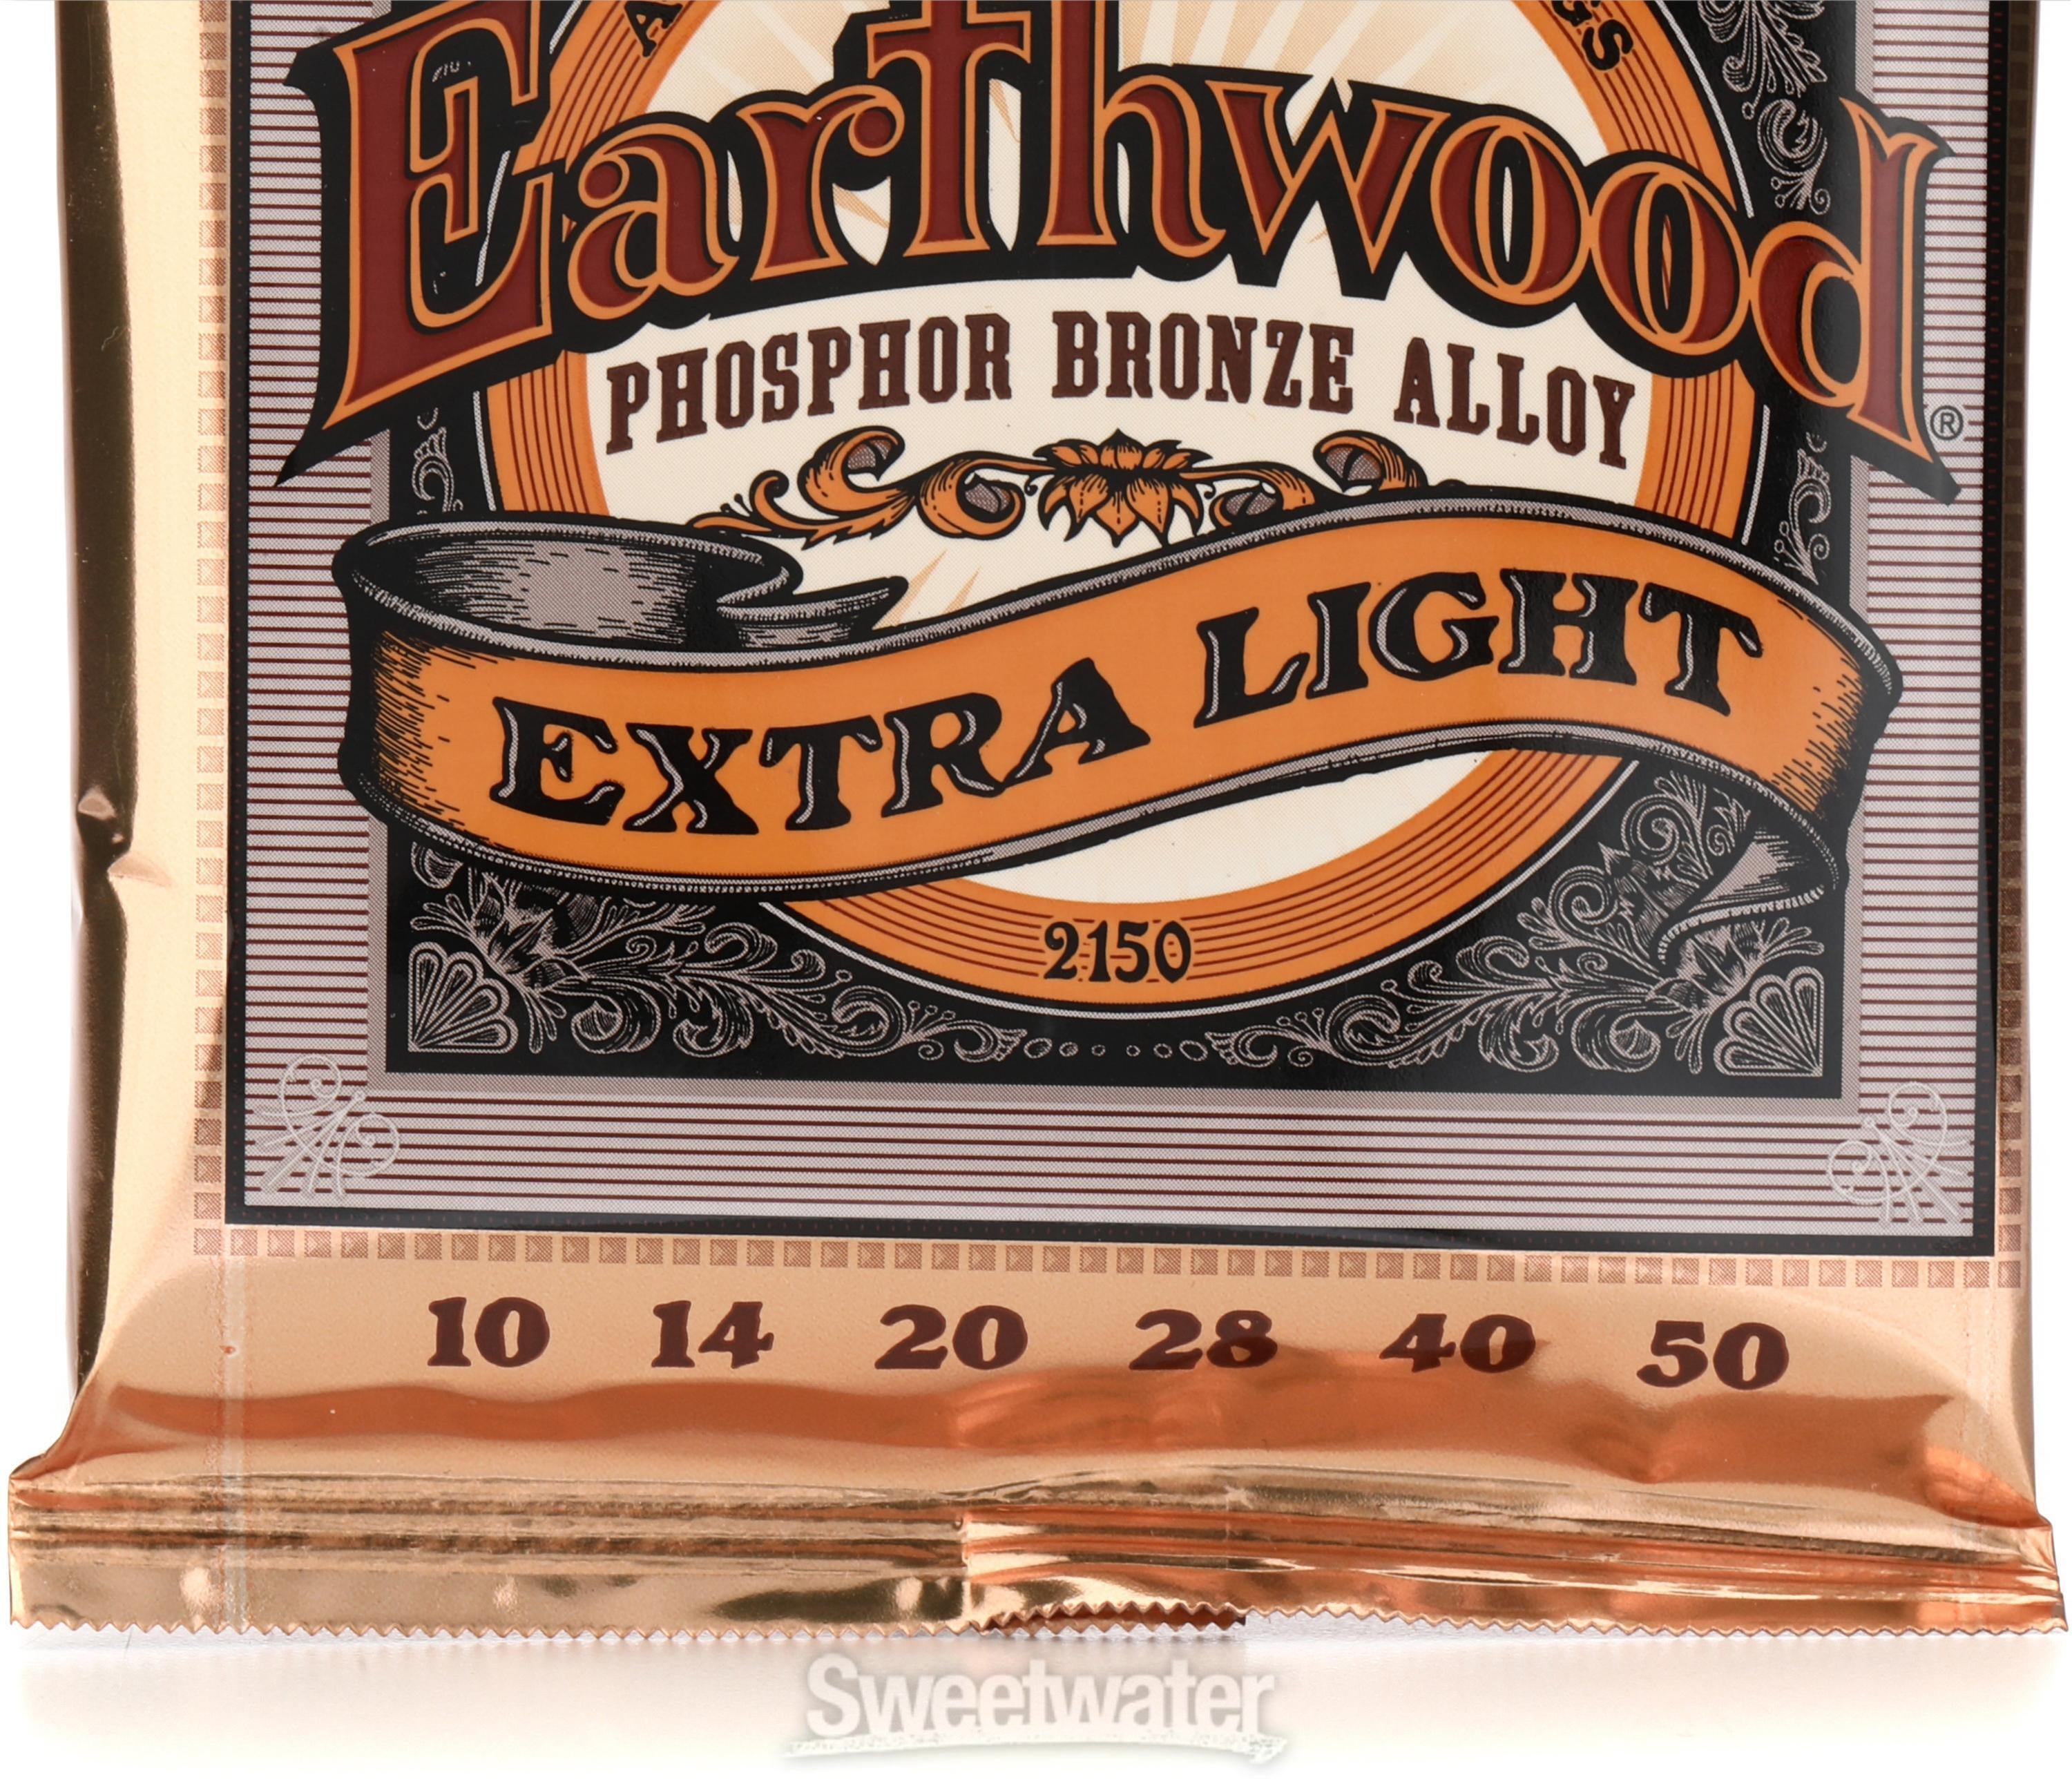 Ernie Ball 2150 Earthwood Phosphor Bronze Acoustic Guitar Strings -  .010-.050 Extra Light